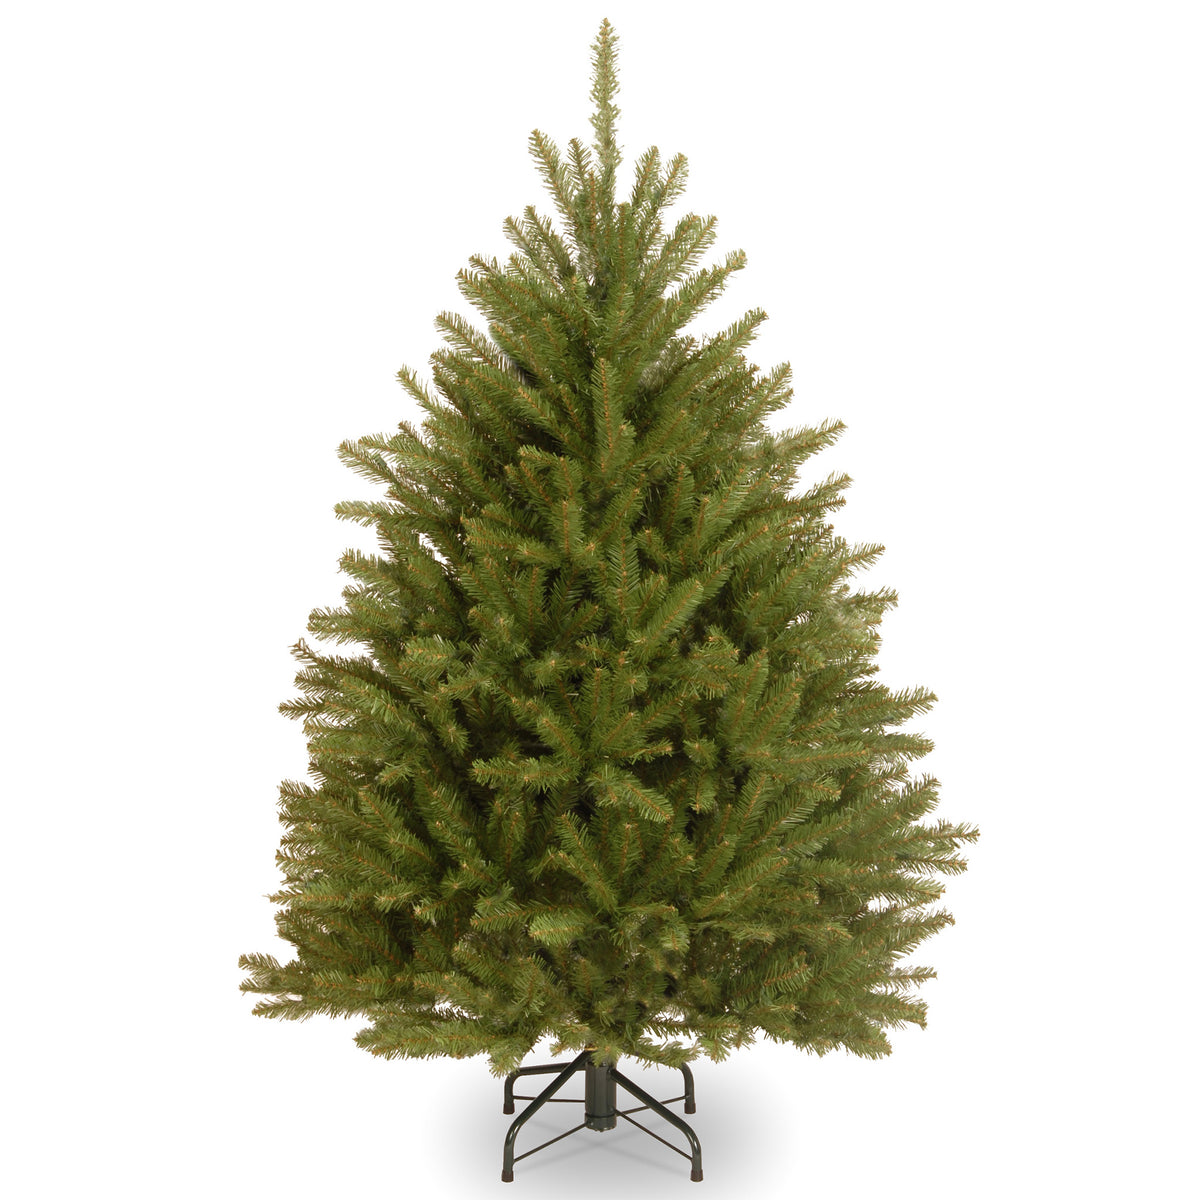 Dunhill Fir Christmas Tree from Roseland